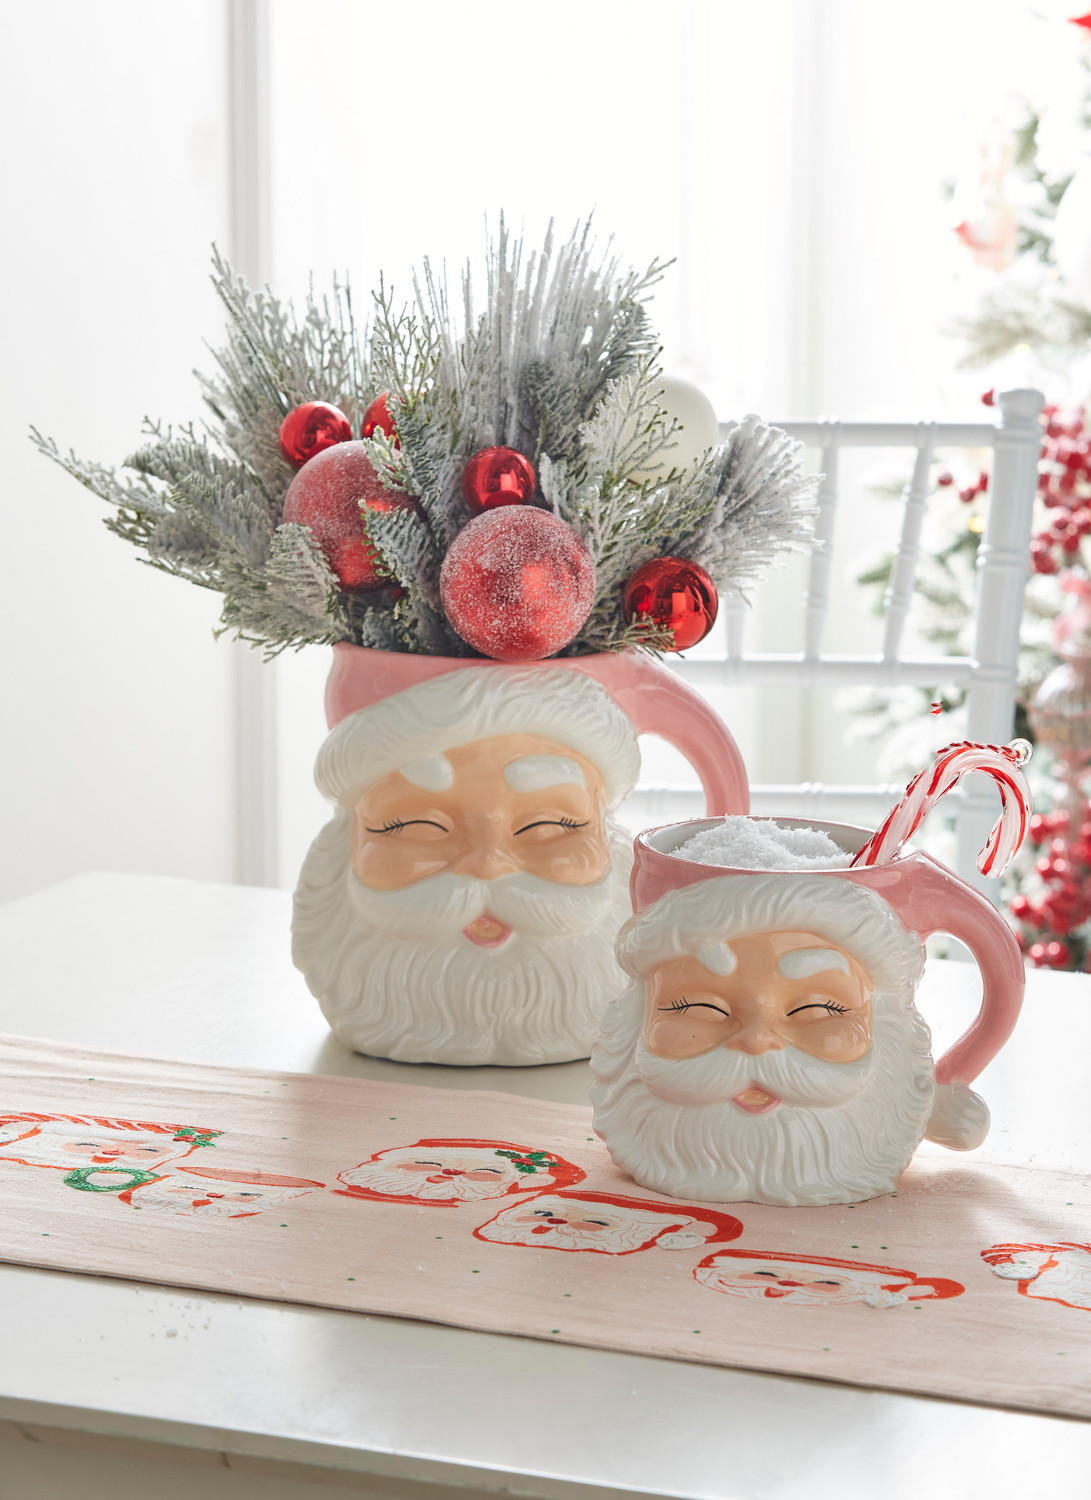 Christmas Cups, Christmas Decorations